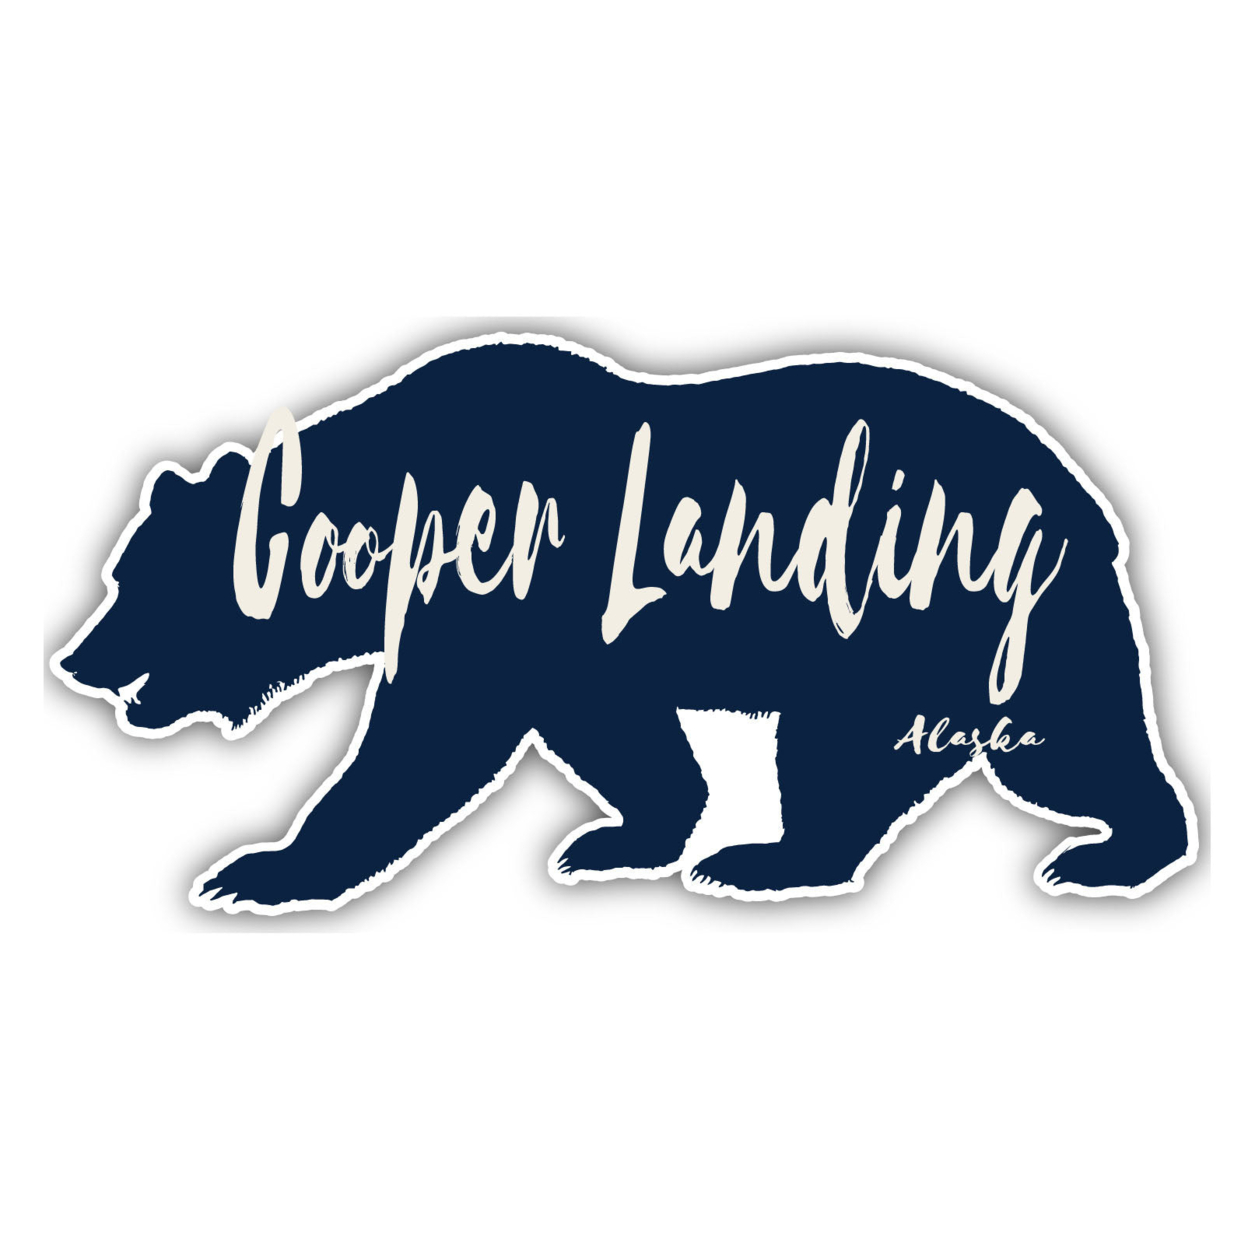 Cooper Landing Alaska Souvenir Decorative Stickers (Choose Theme And Size) - Single Unit, 10-Inch, Tent